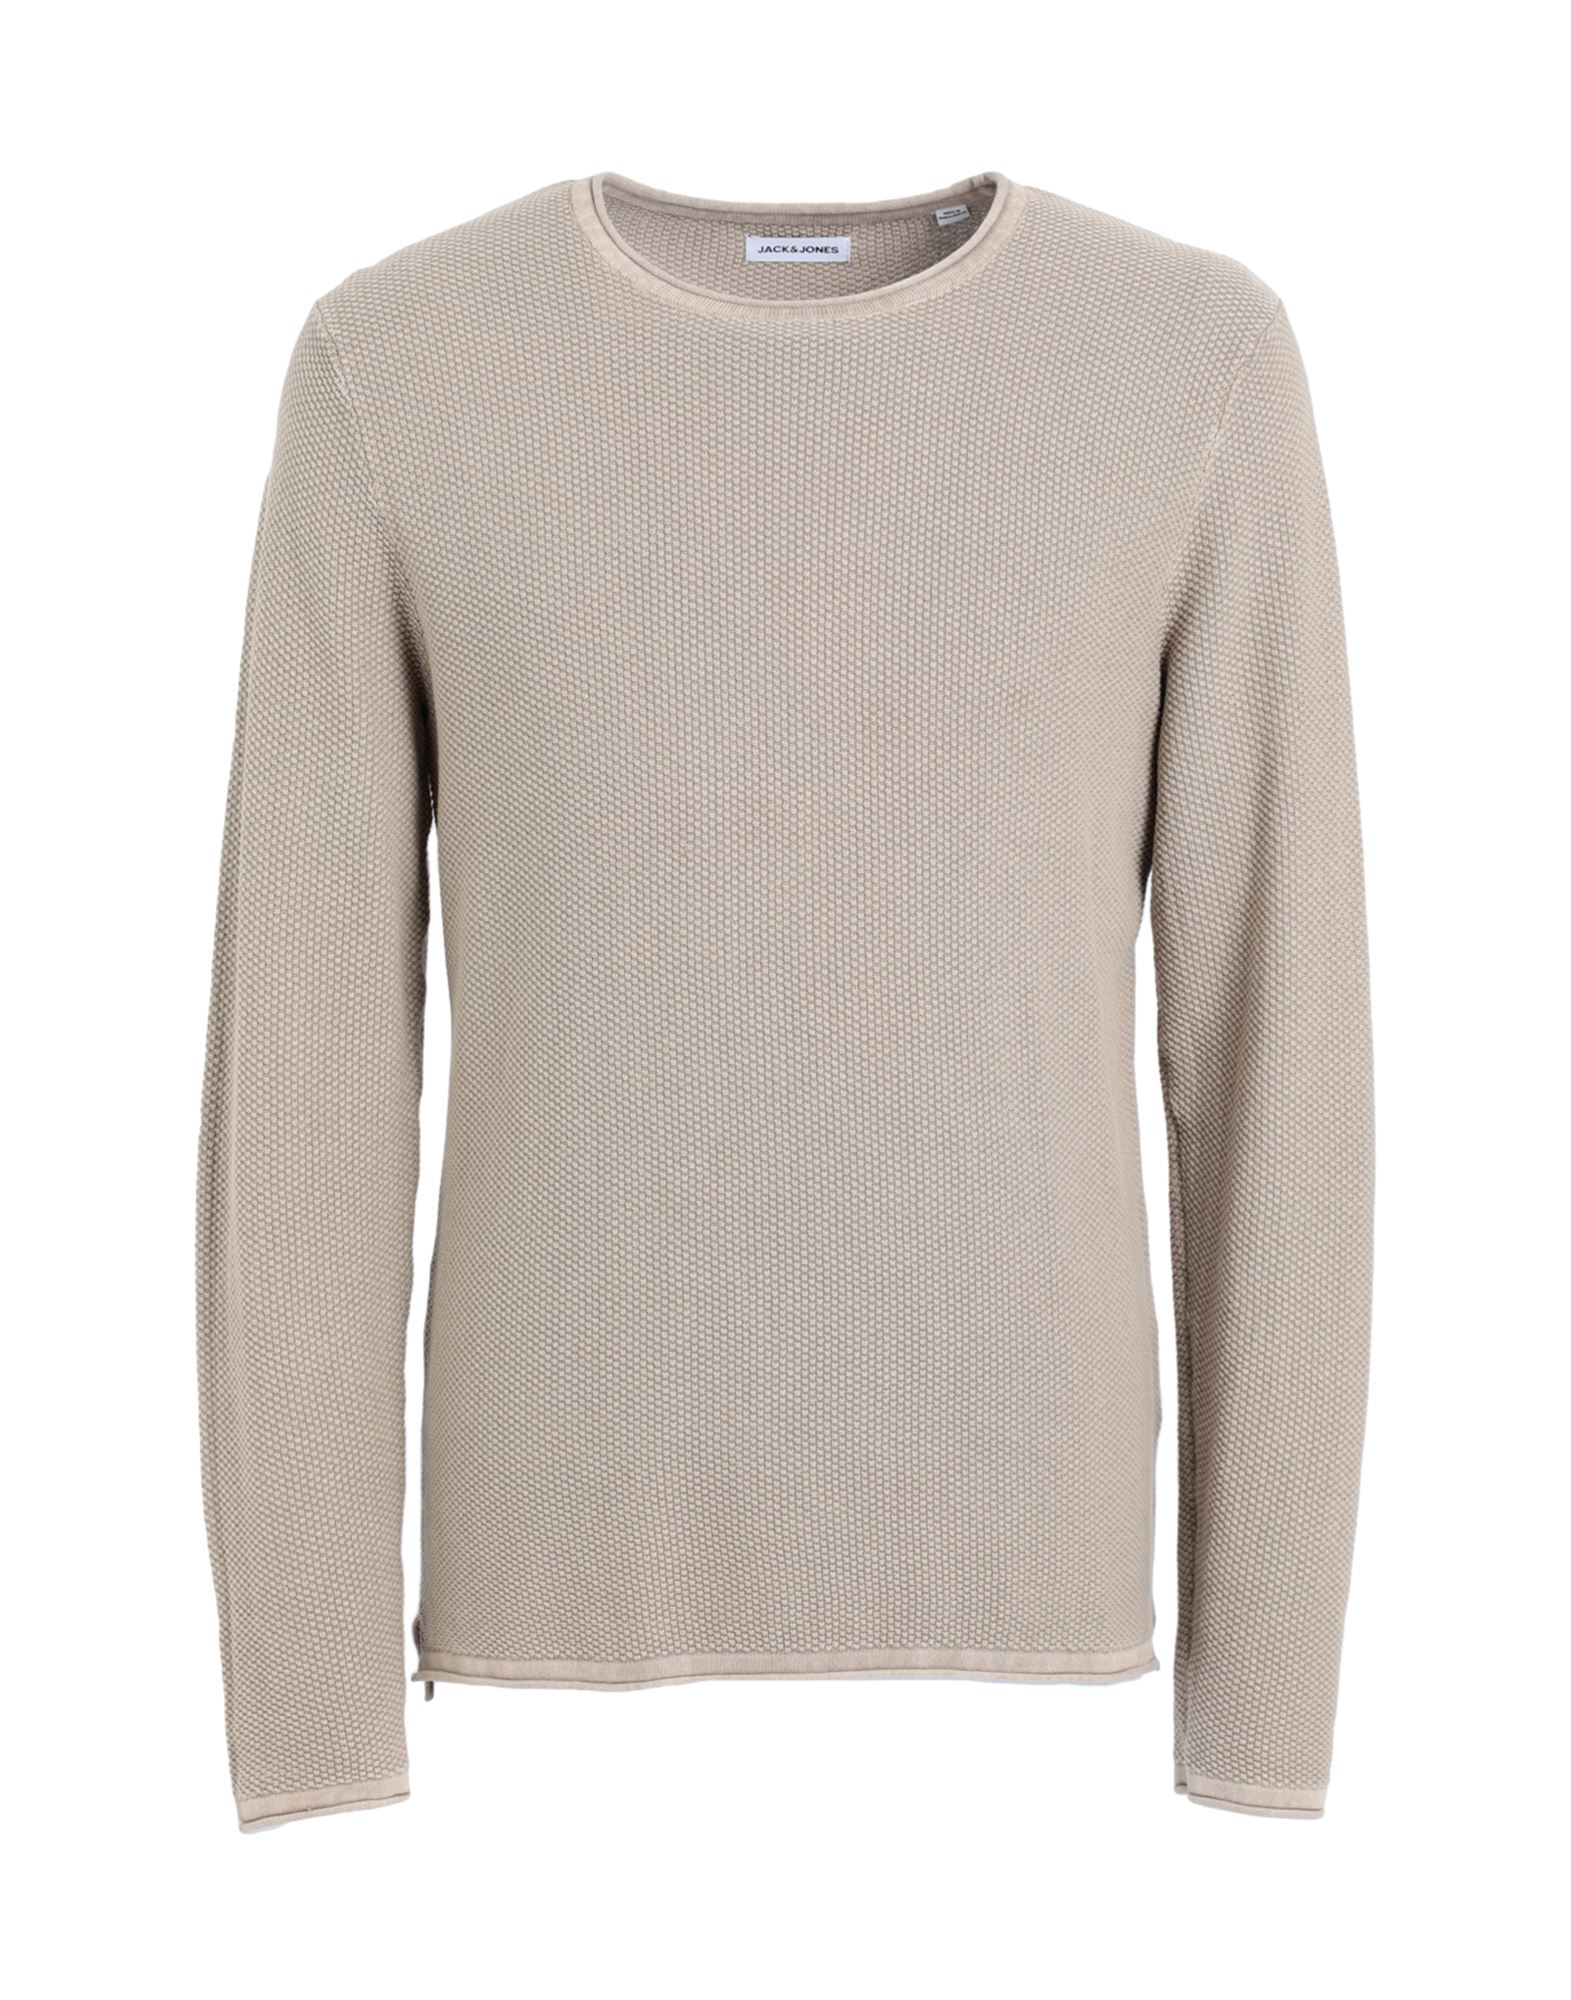 Jack & Jones Man Sweater Light Brown Size L Cotton In Beige